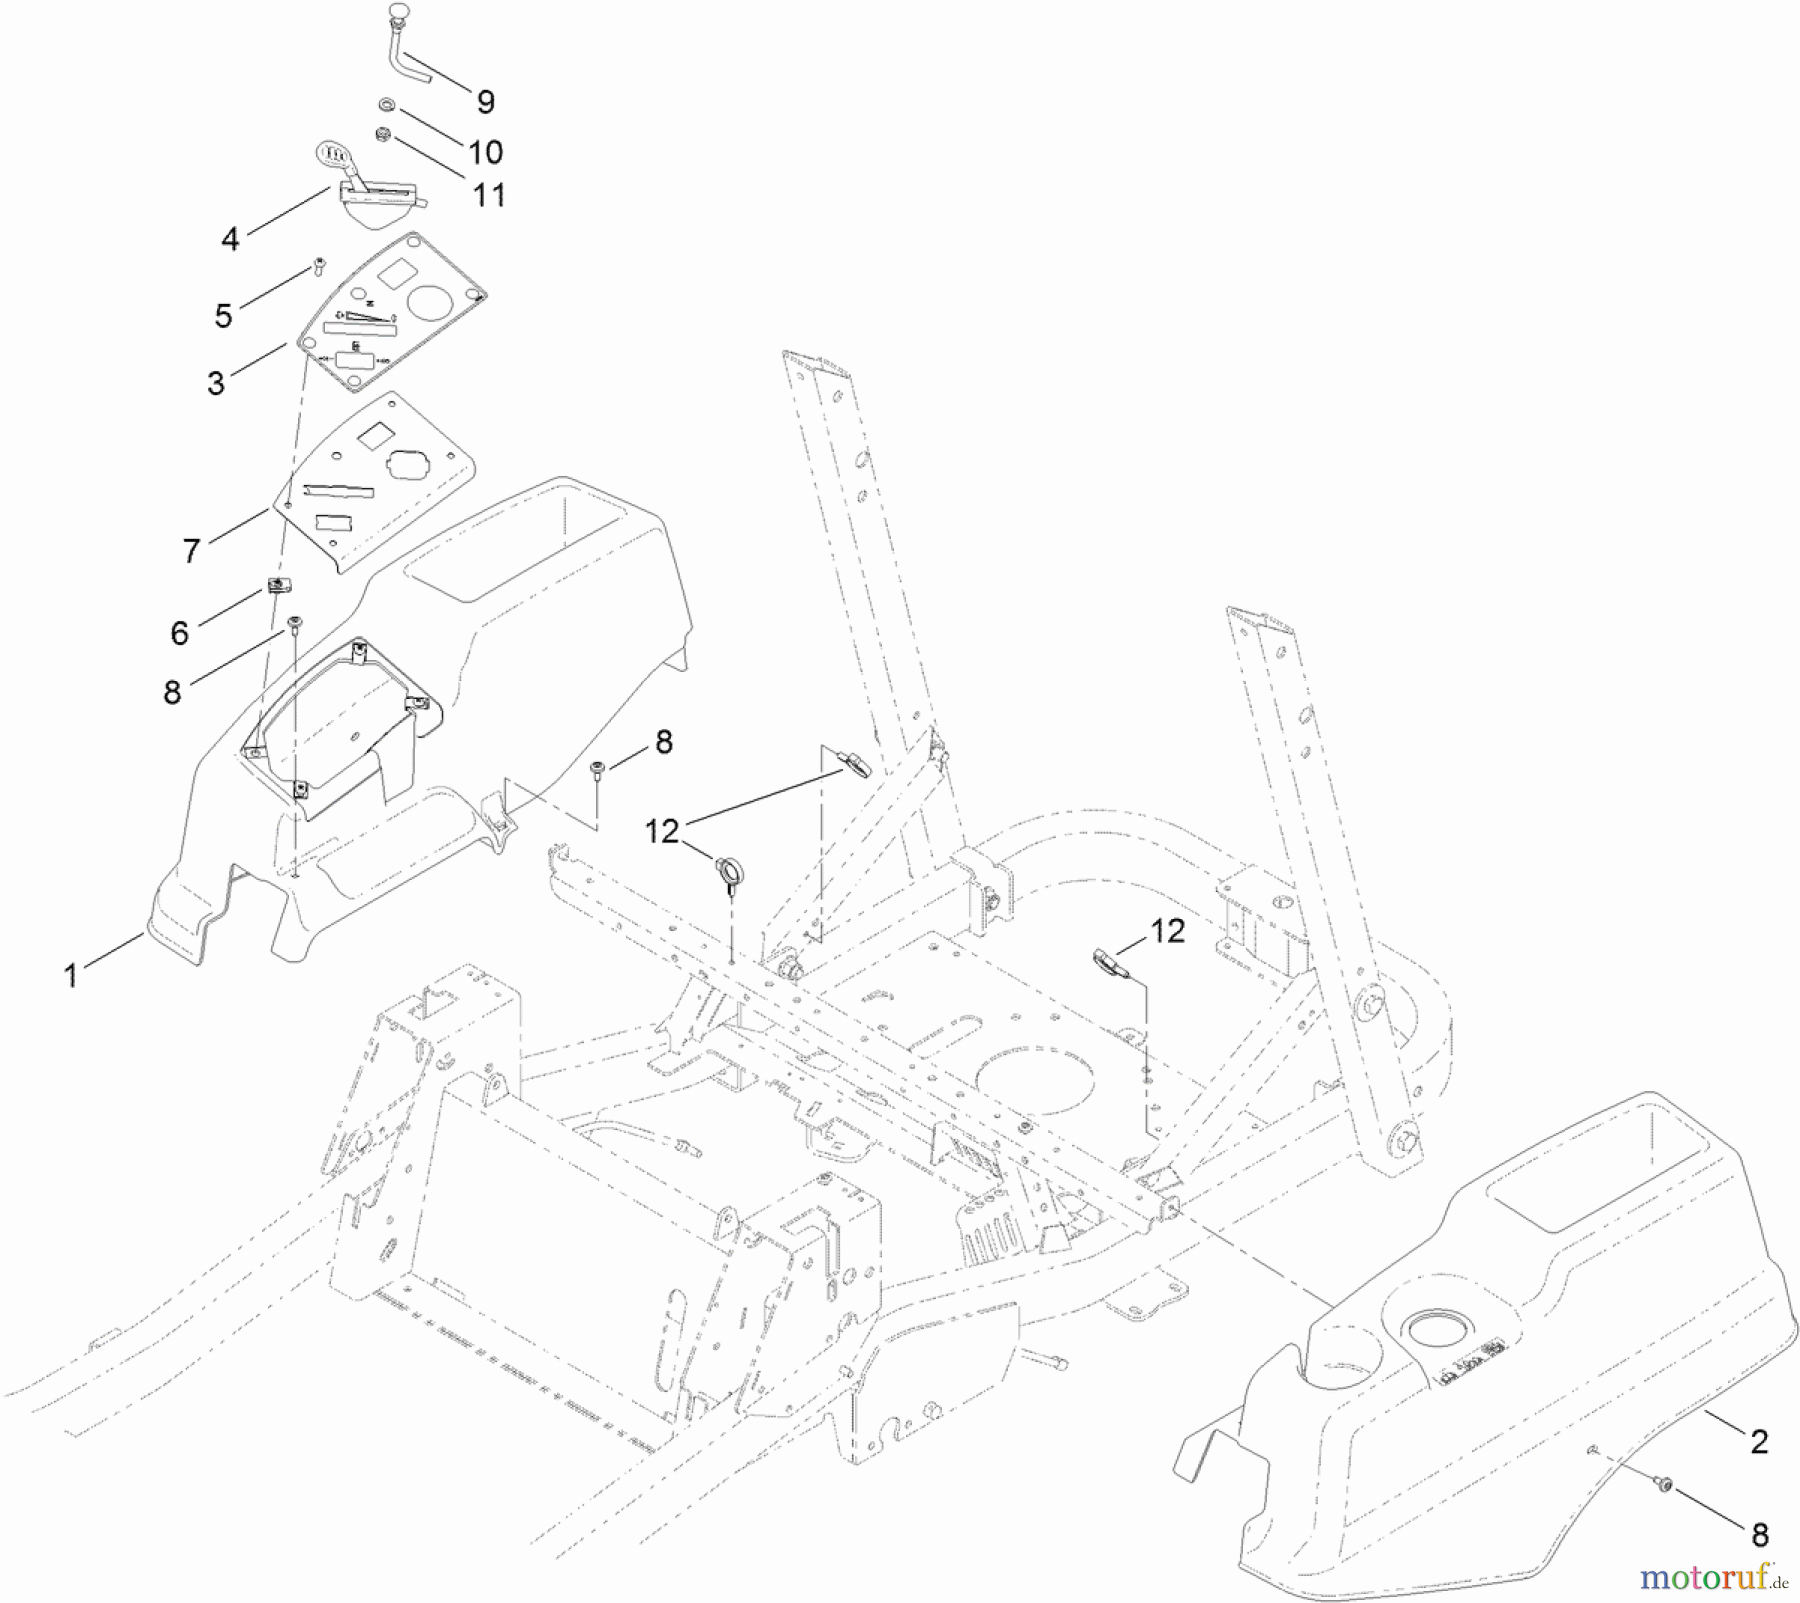  Toro Neu Mowers, Zero-Turn 74841 (ZX4820) - Toro TITAN ZX4820 Zero-Turn-Radius Riding Mower, 2012 (SN 312000001-312999999) CONTROL PANEL AND BODY STYLING POD ASSEMBLY